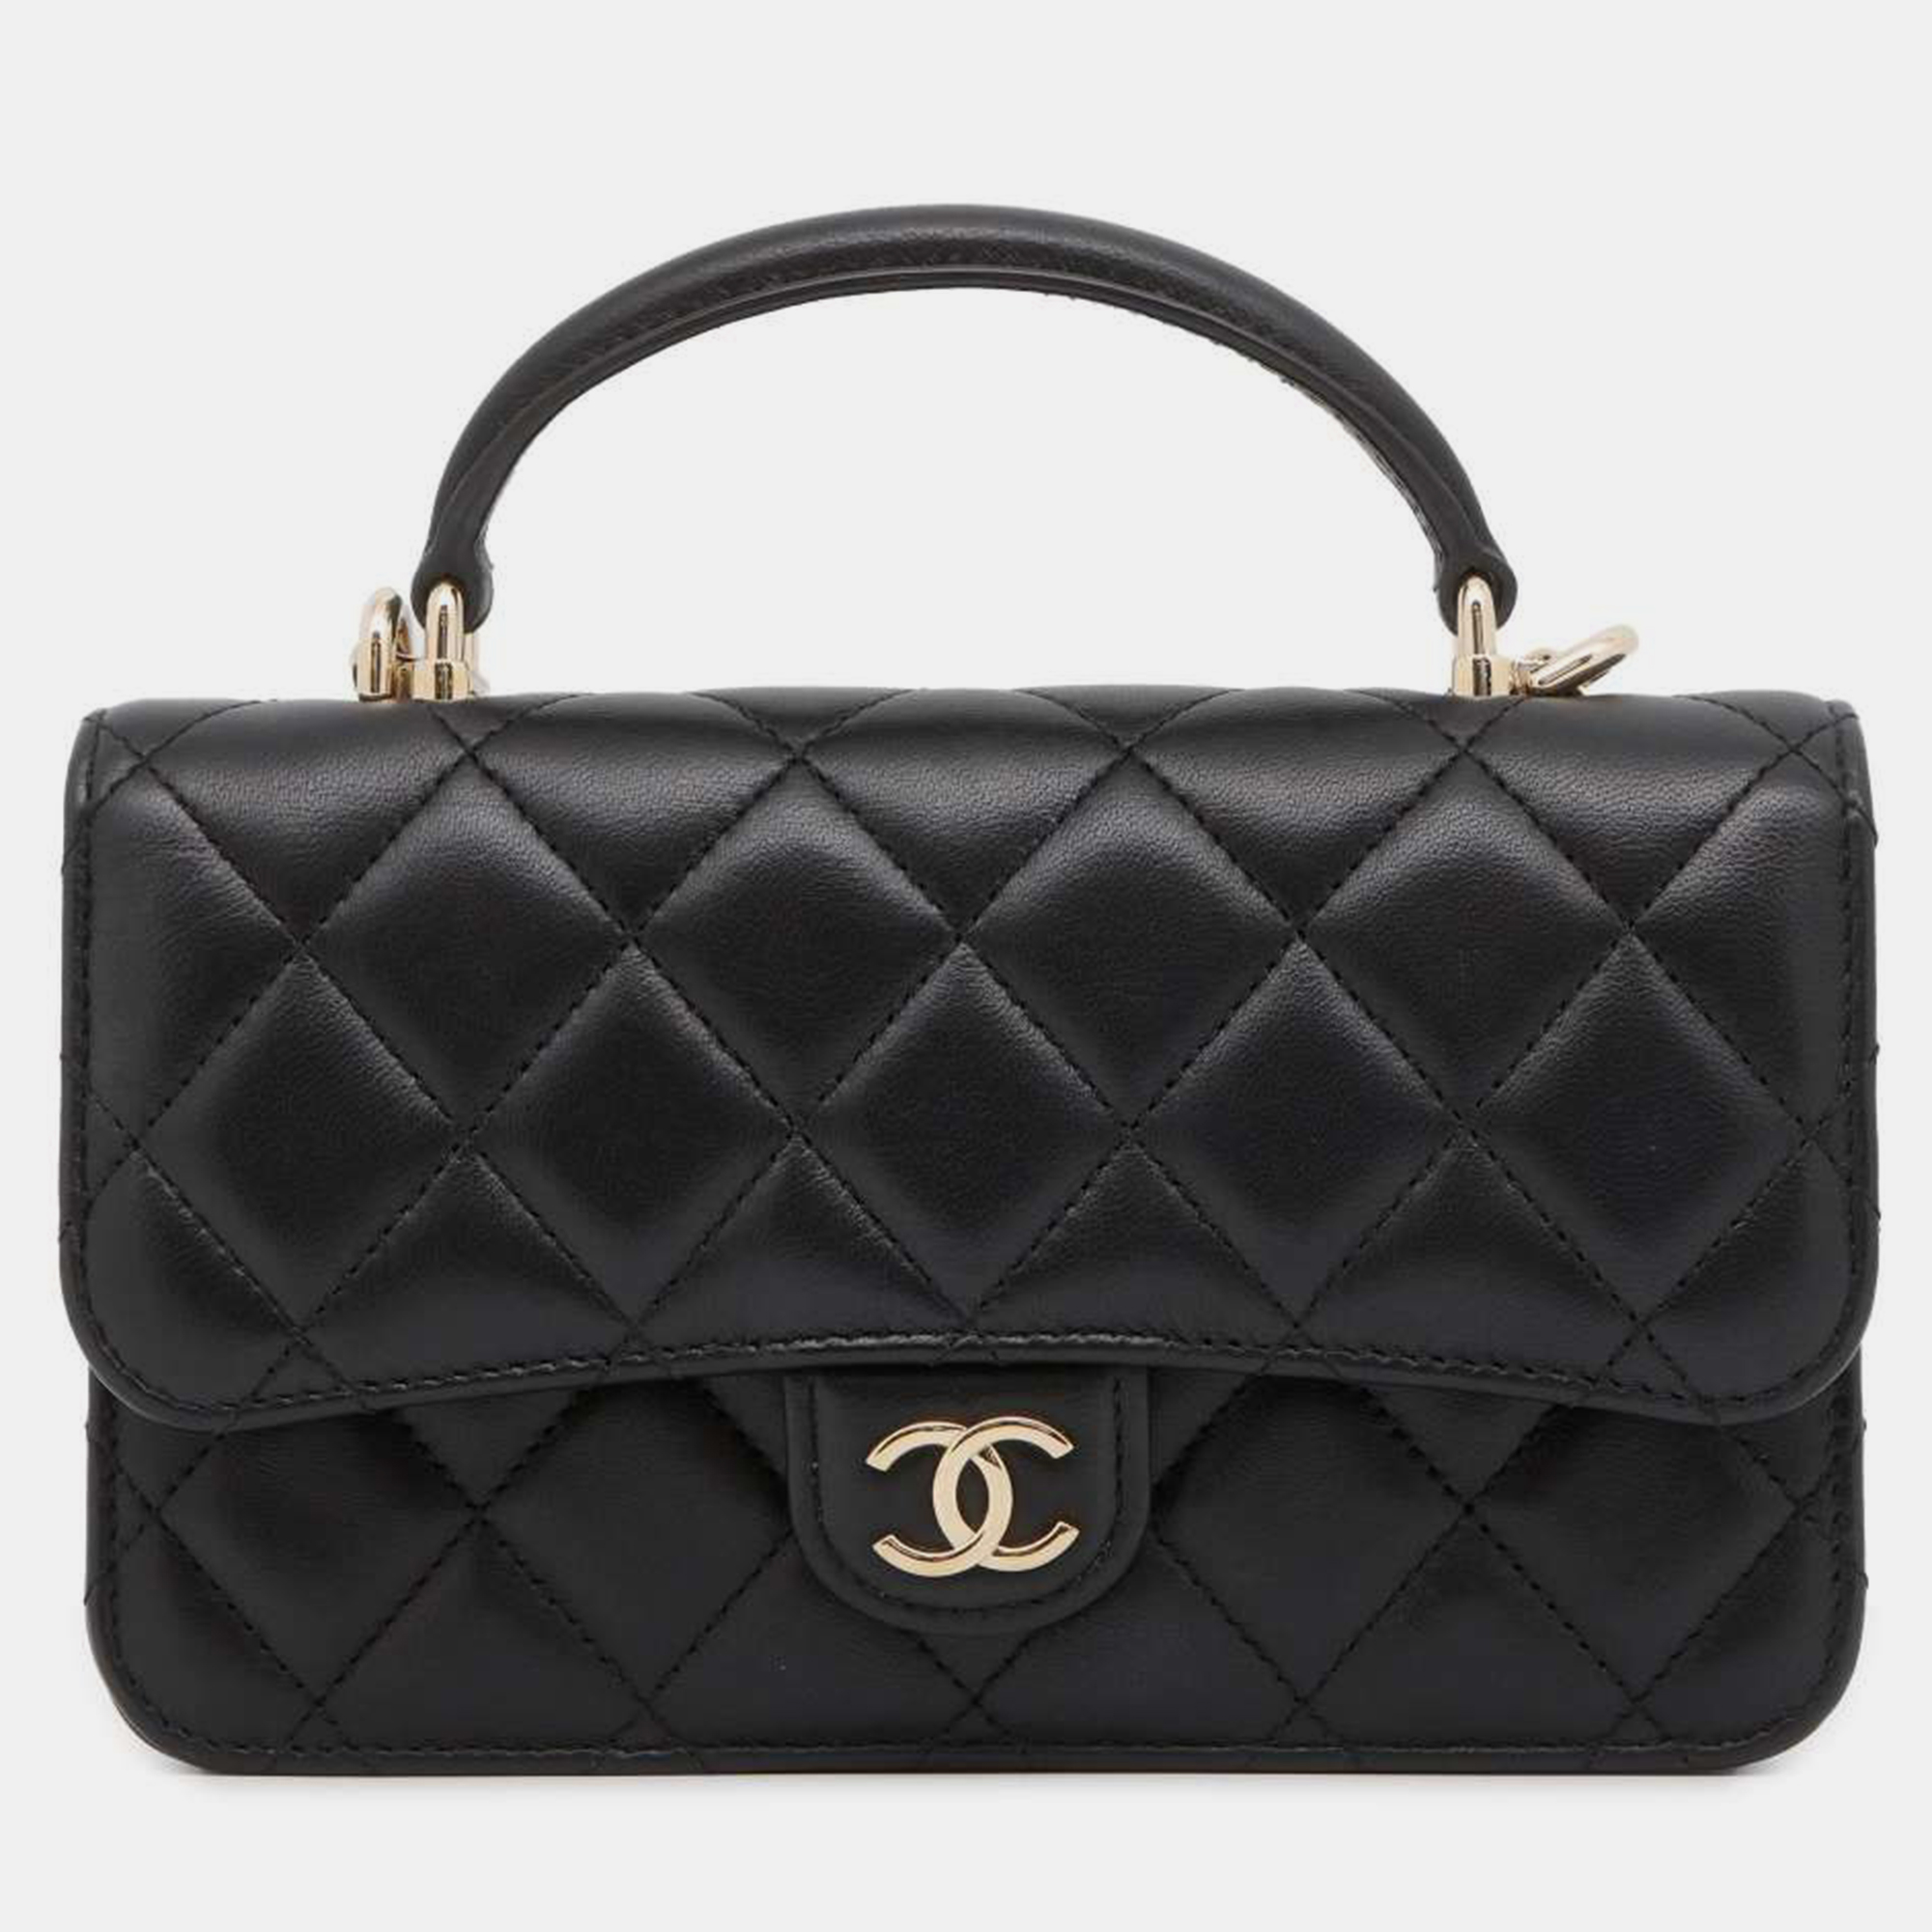 Chanel black leather top handle phone holder flap bag